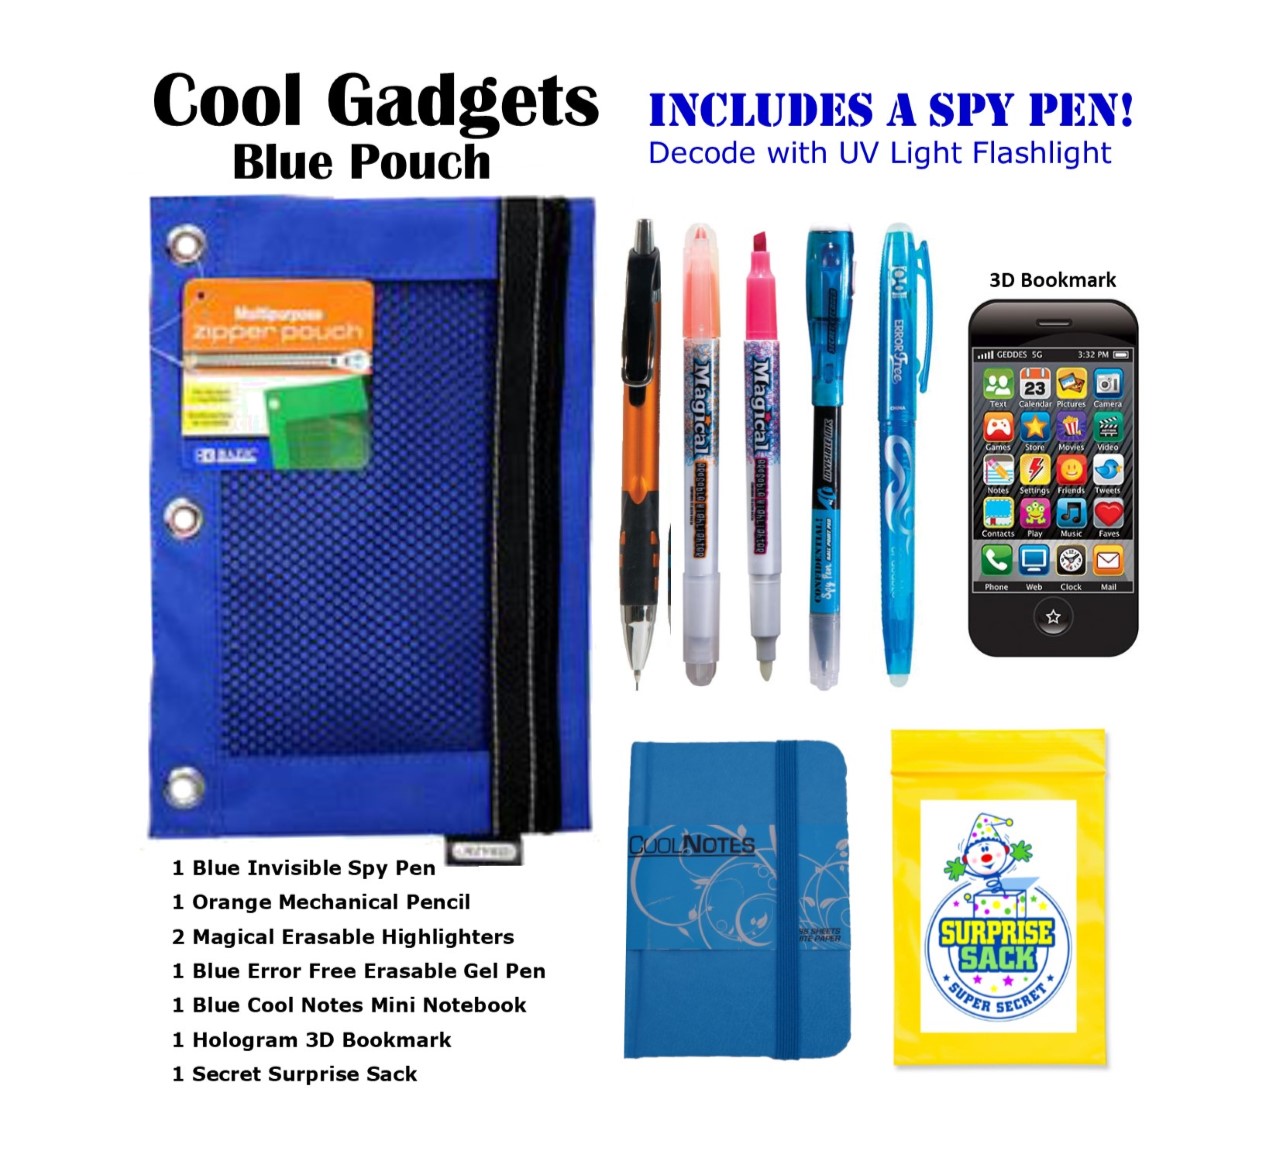 https://secretsurprisesack.com/wp-content/uploads/2018/08/Cool-Gadgets-Blue-Pouch.jpg